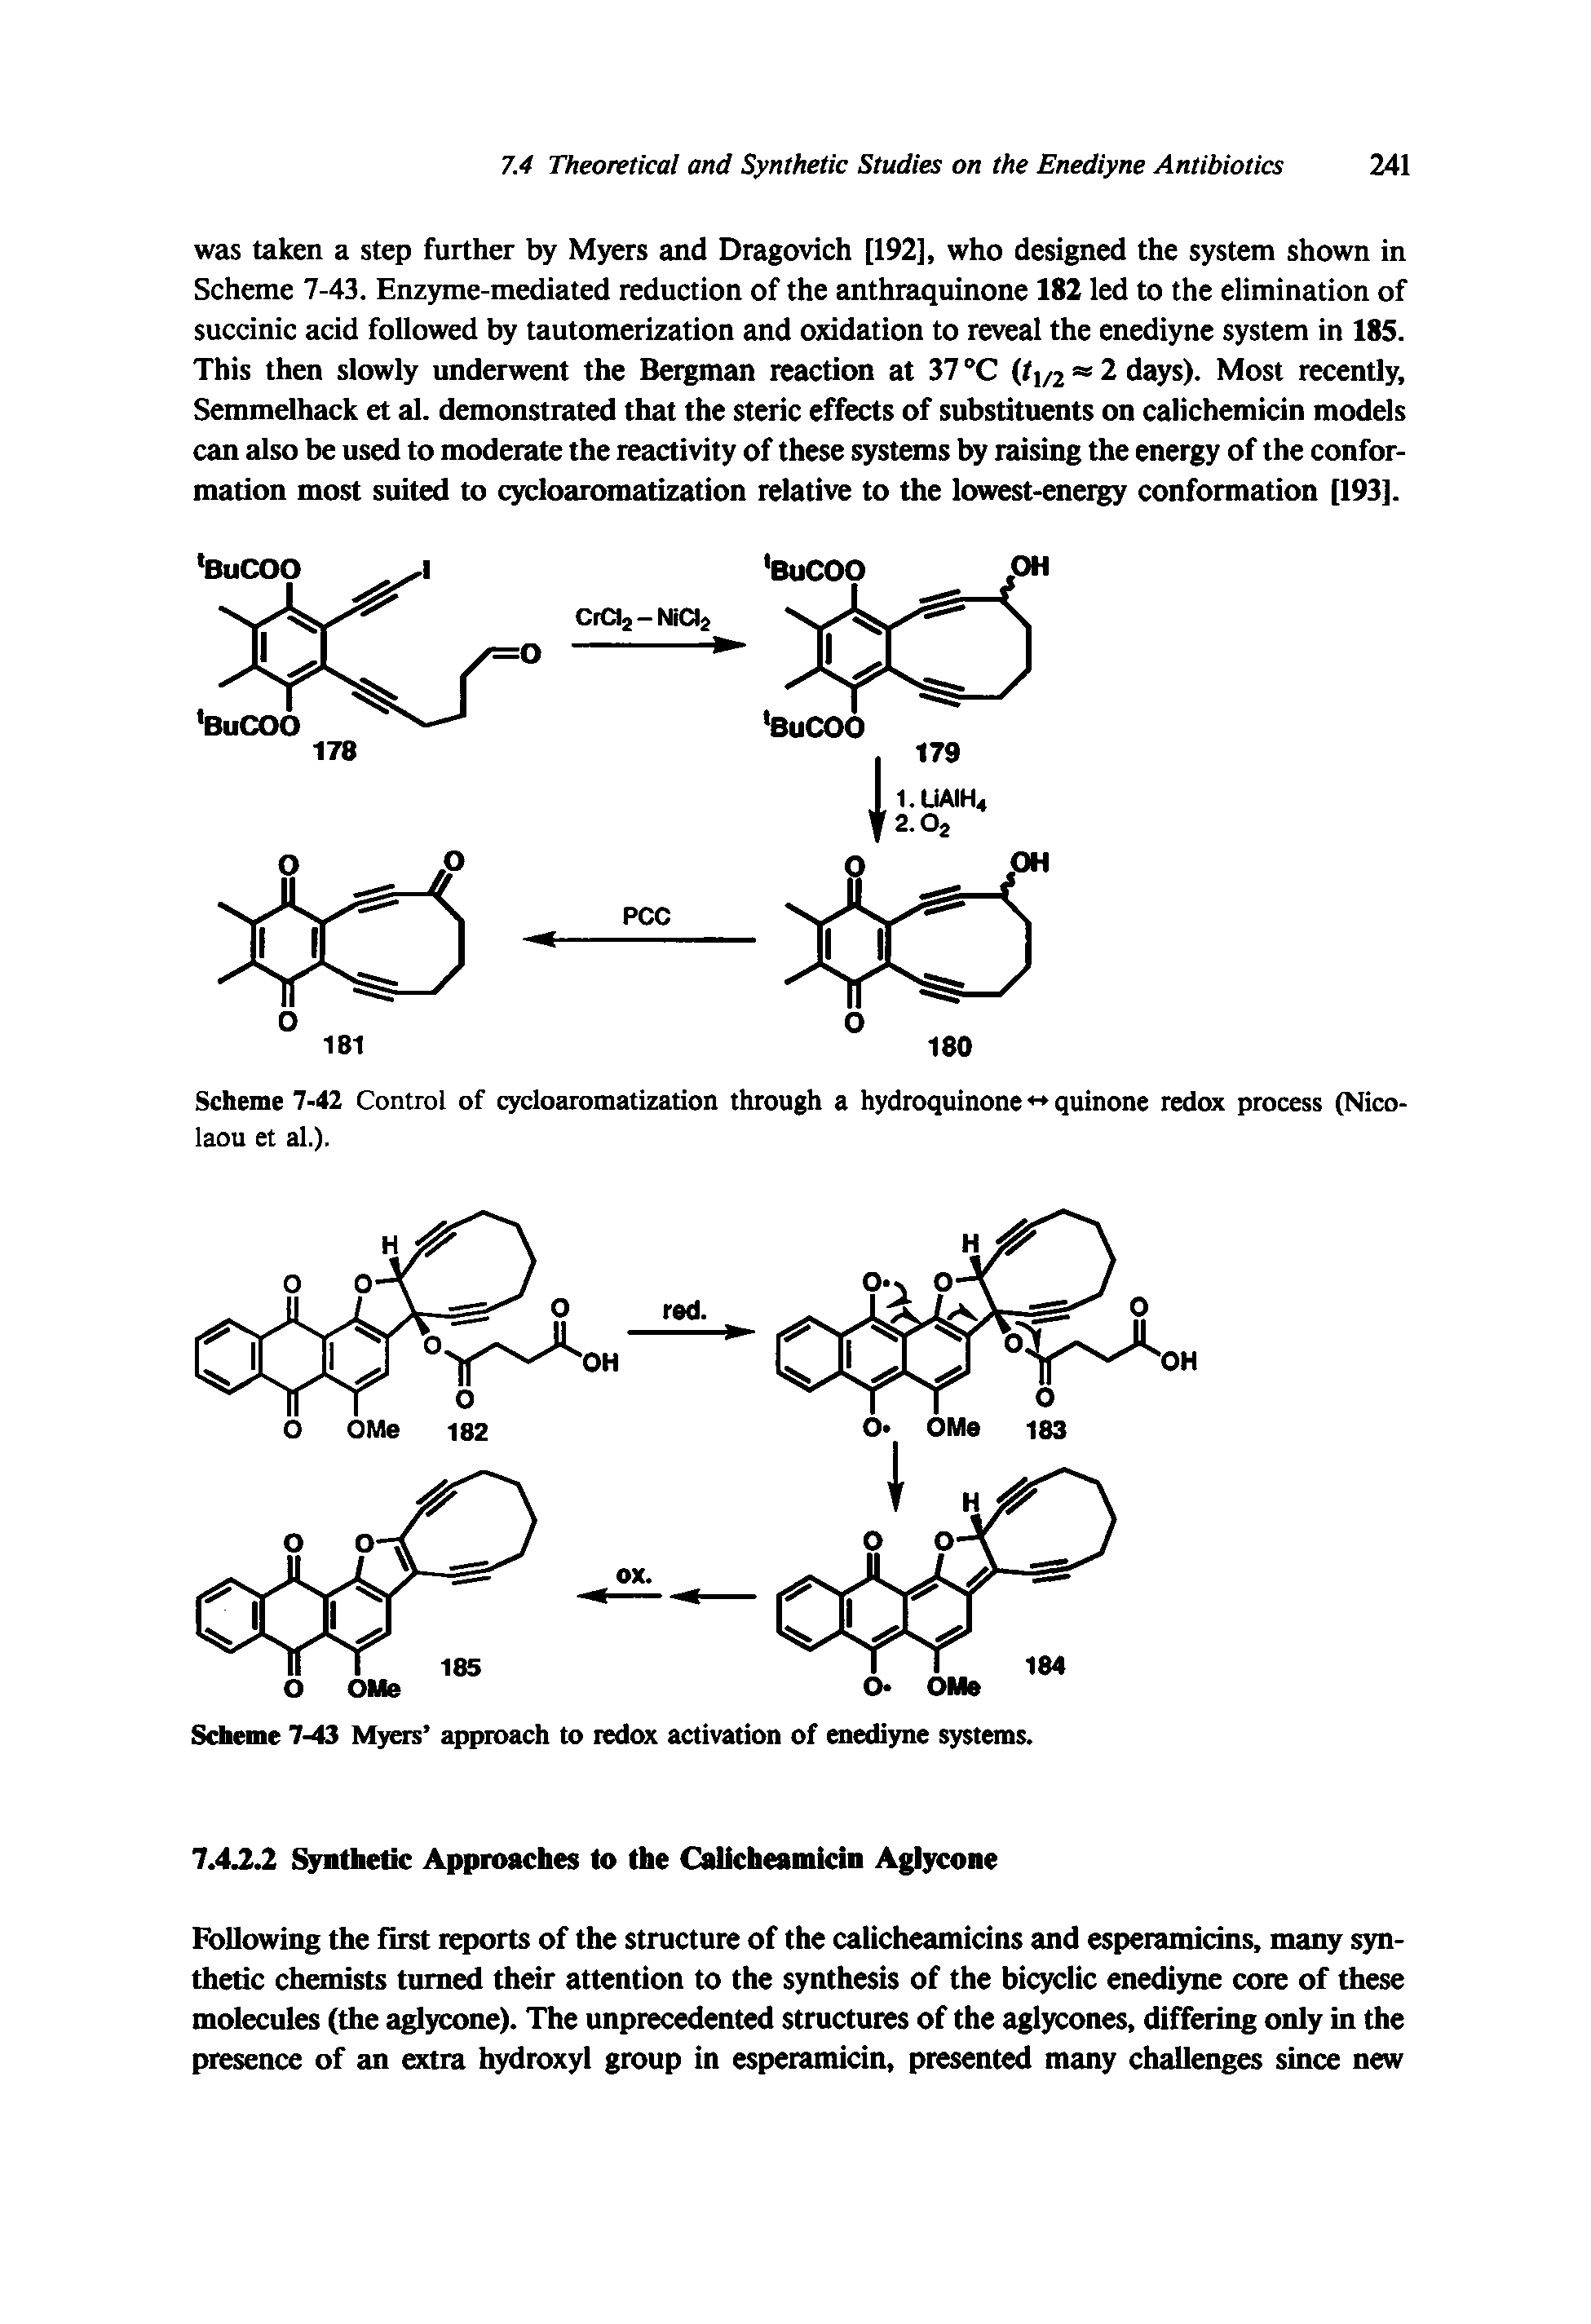 Scheme 7-42 Control of cycloaromatization through a hydroquinone quinone redox process (Nico-laou et al.).